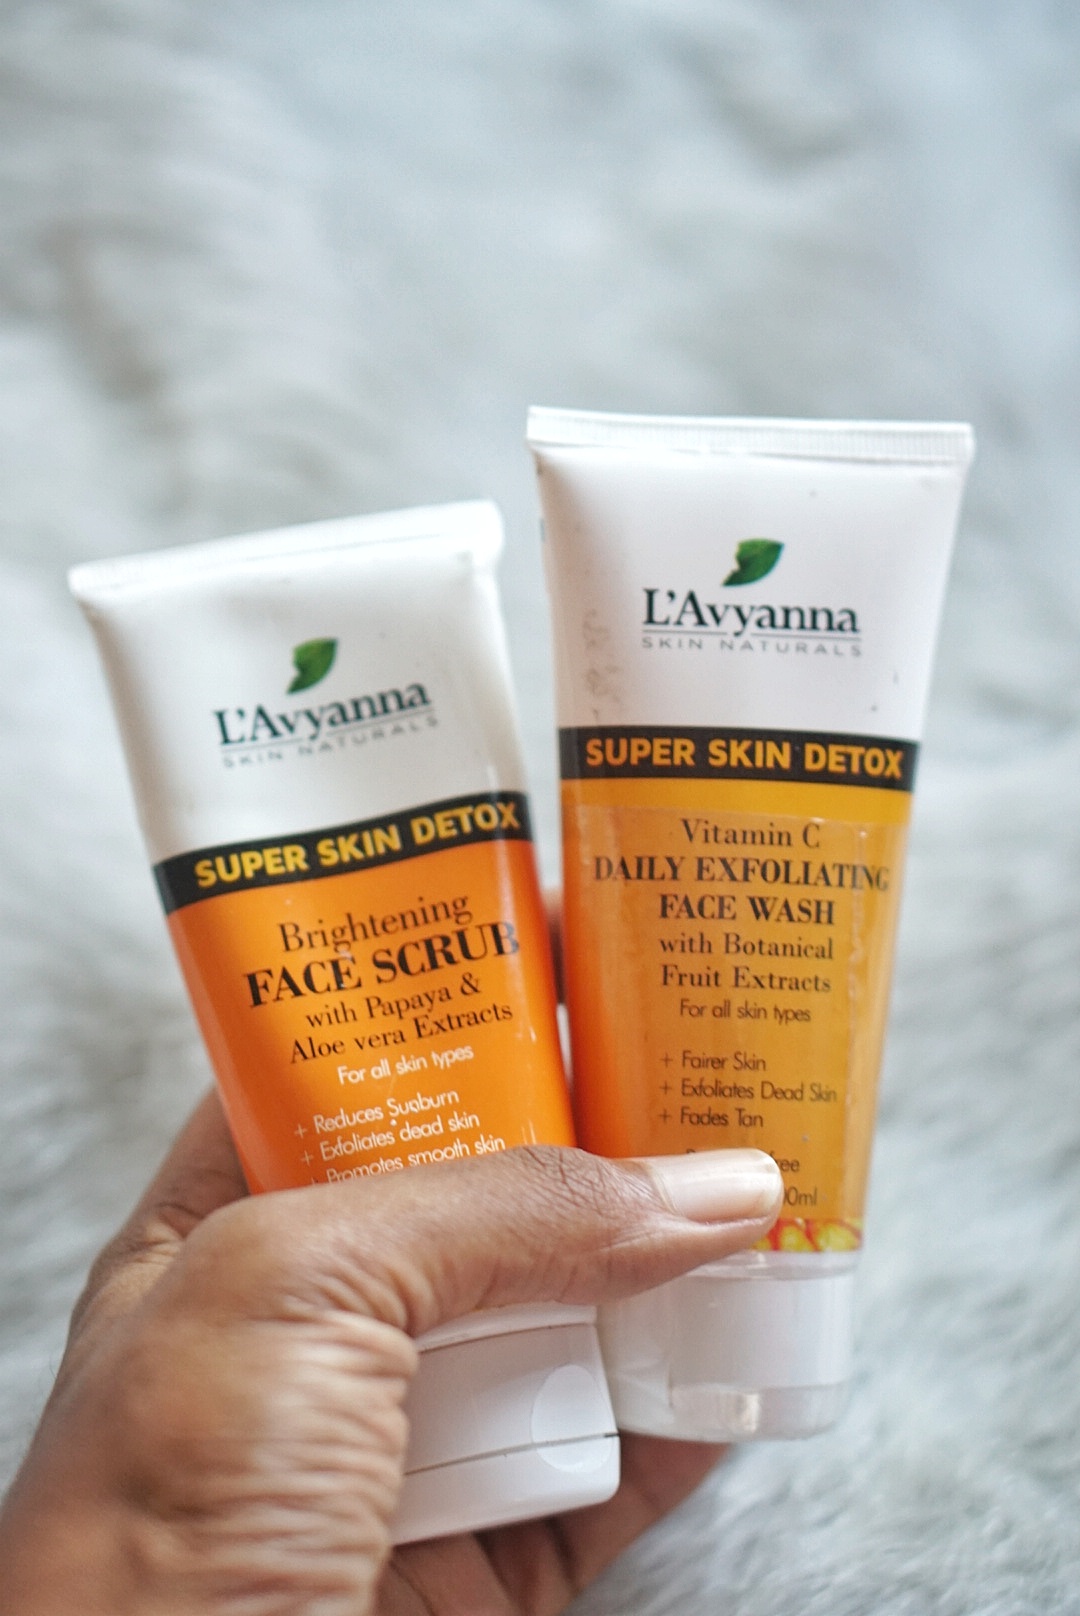 lavyanna skin naturals face scrub and face wash